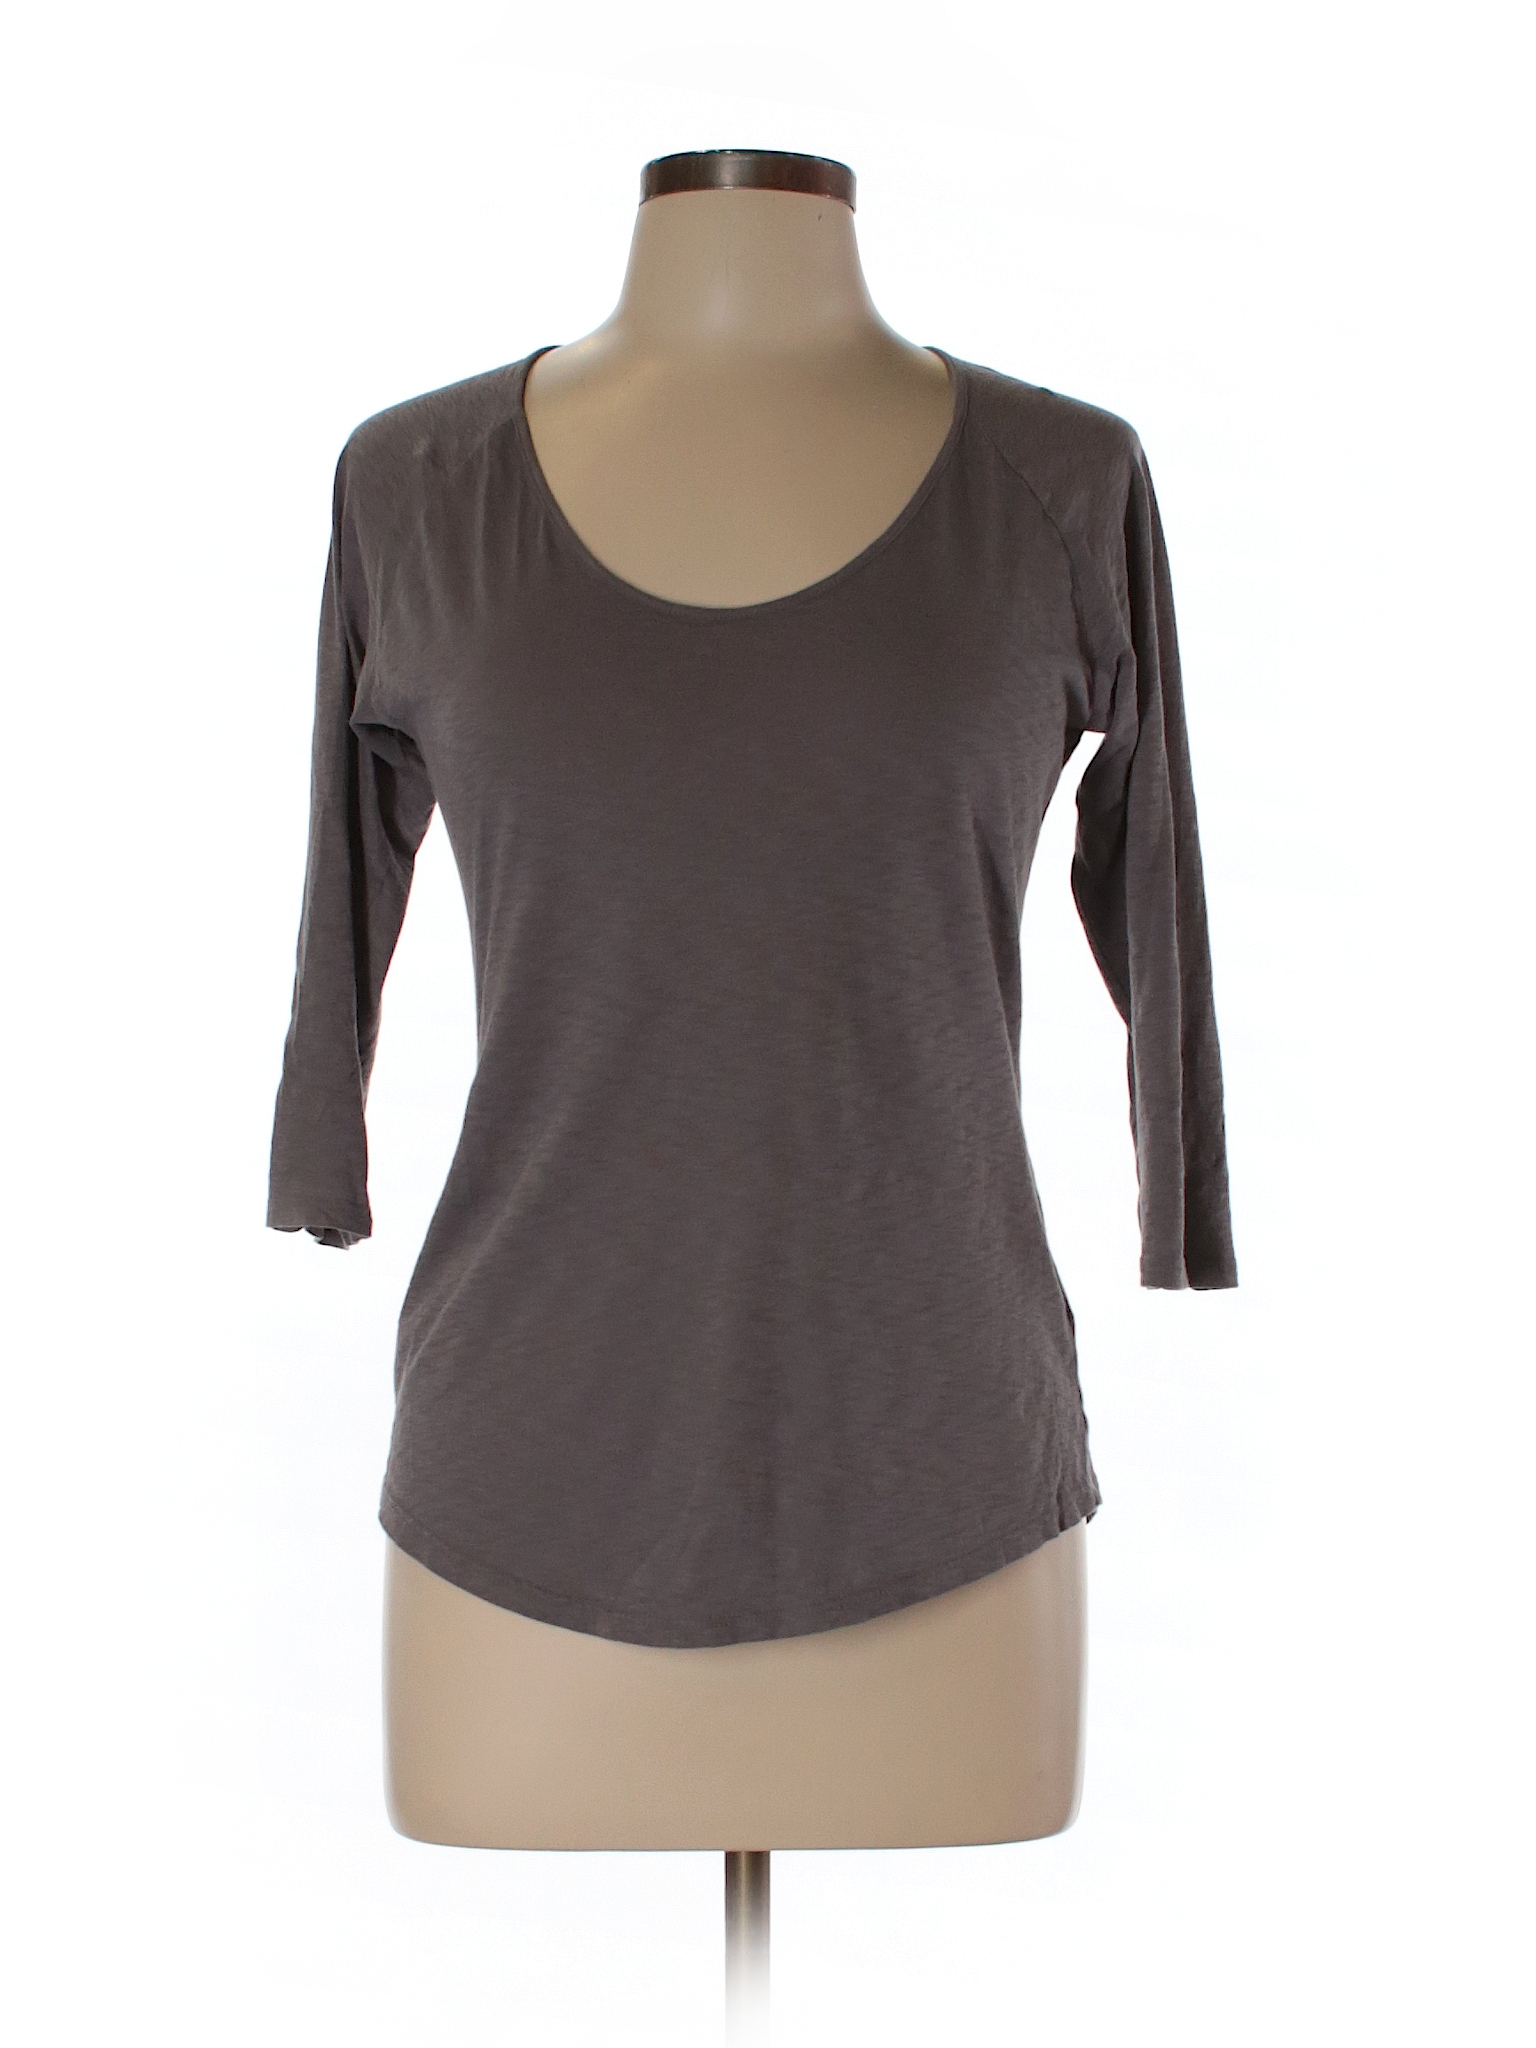 Cynthia Rowley TJX 100% Pima Cotton Solid Gray 3/4 Sleeve T-Shirt Size ...